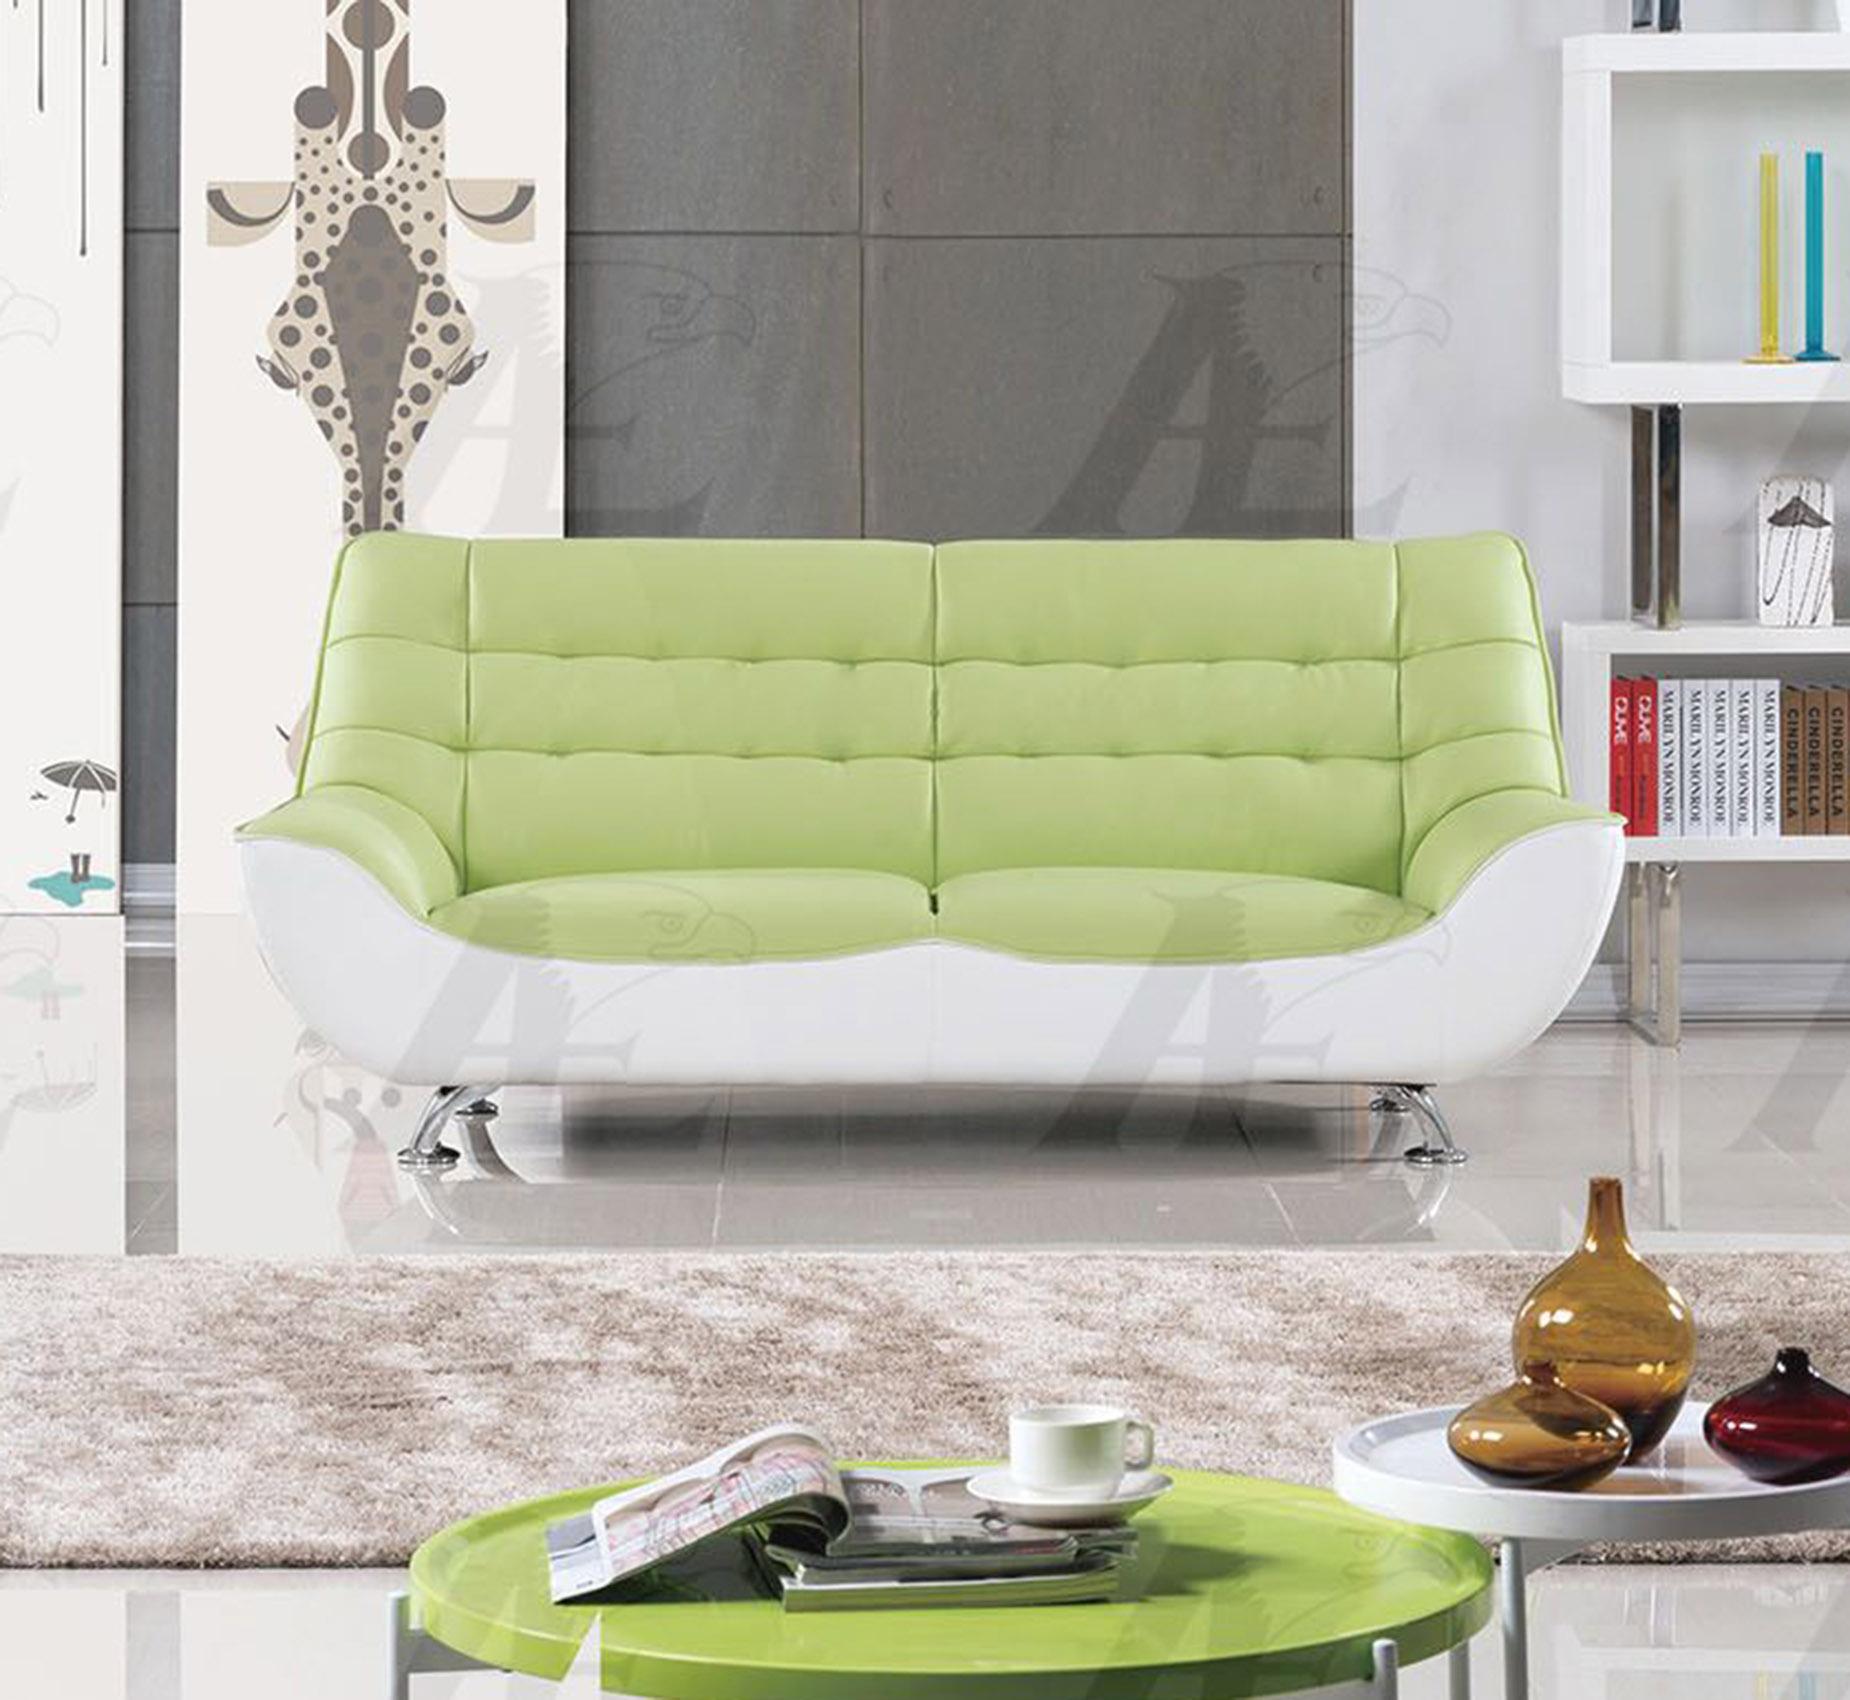 

    
American Eagle Furniture AE612-GN.W Sofa Green/White AE612-GN.W
